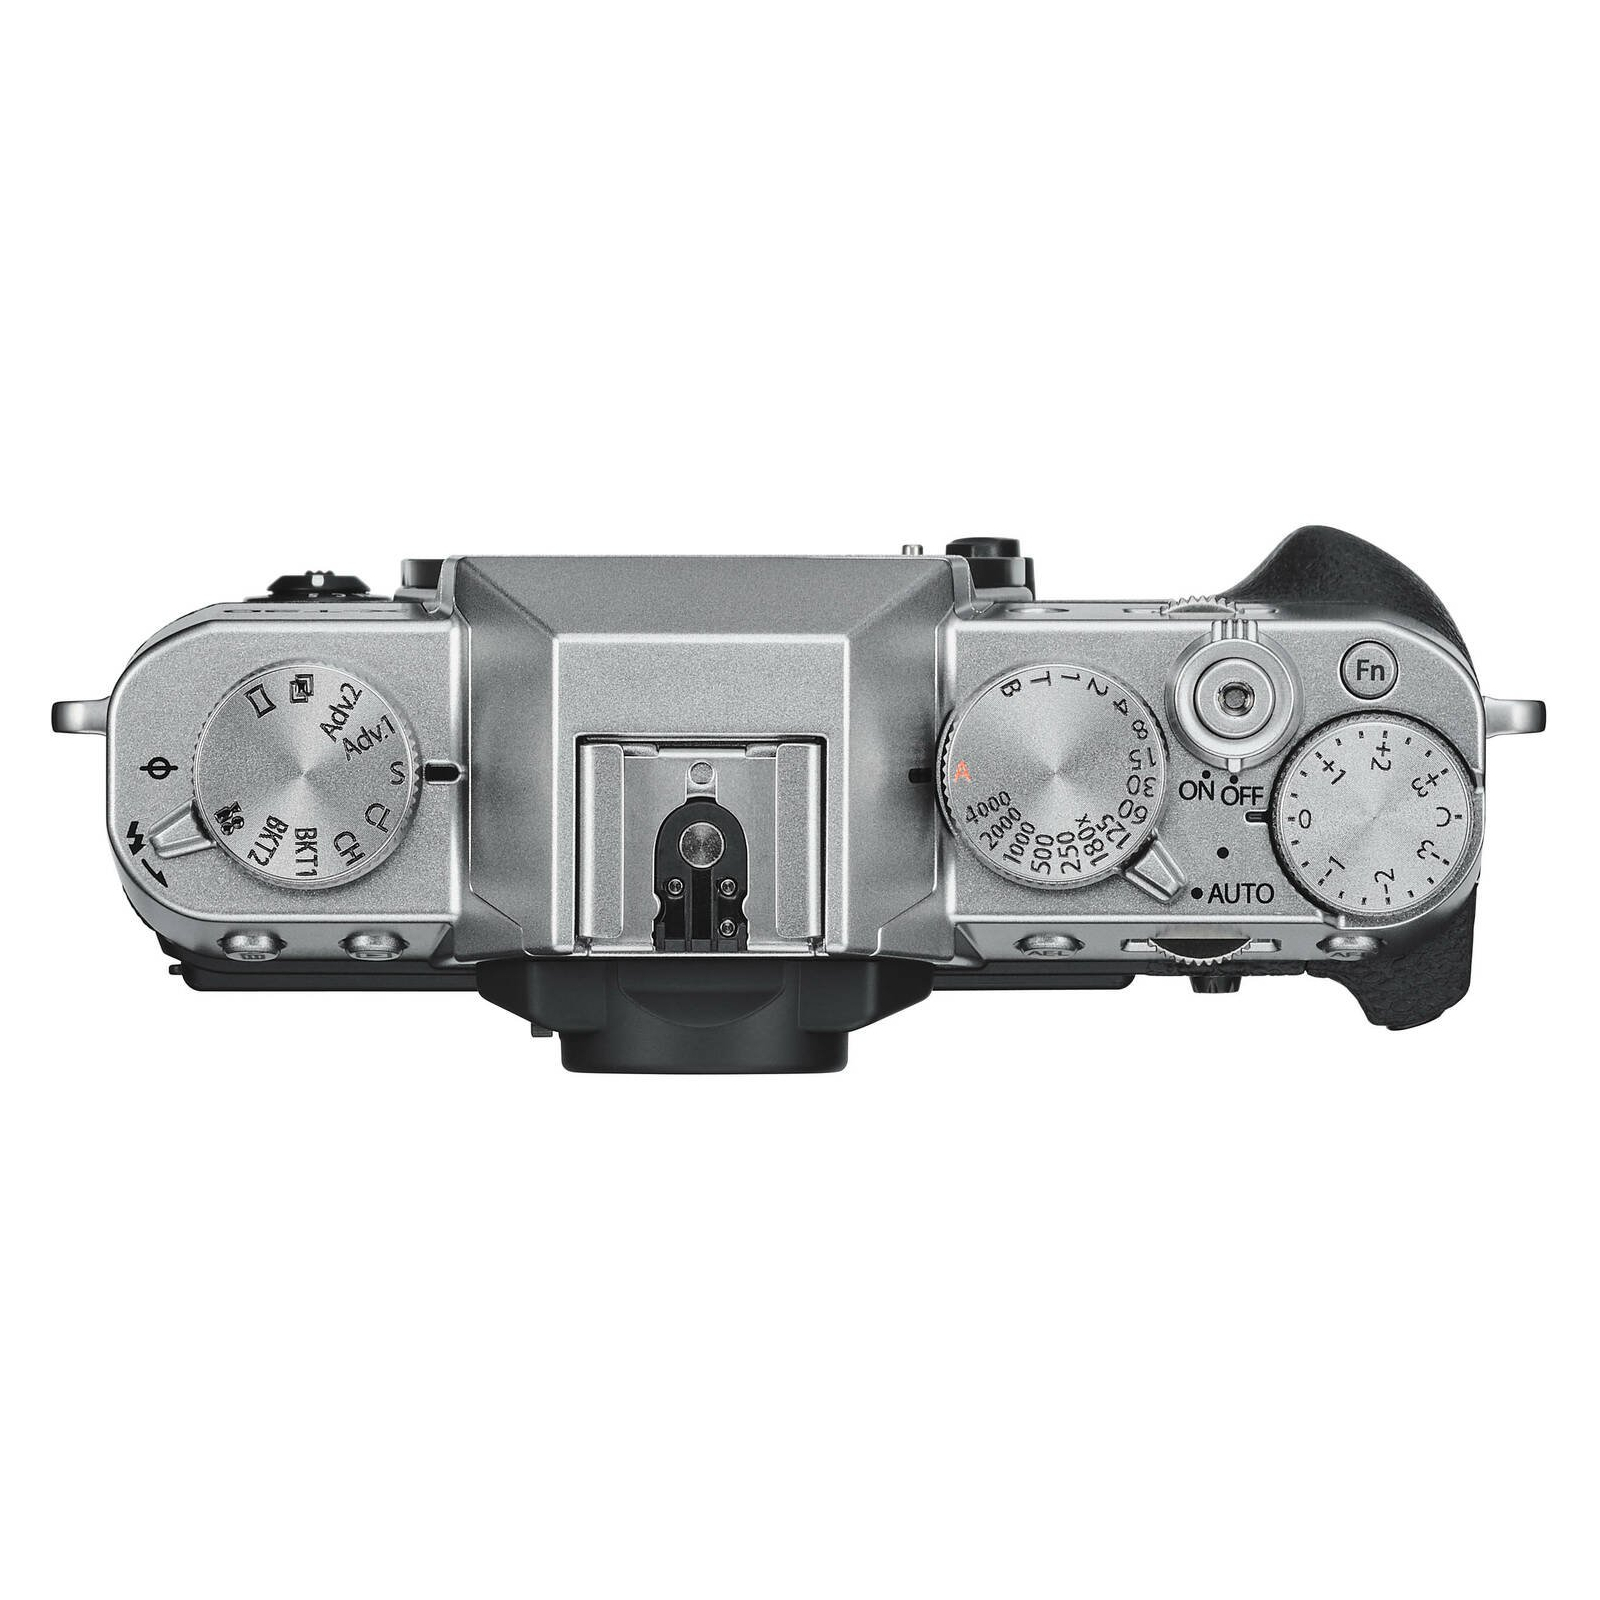 Цифровой фотоаппарат Fujifilm X-T30 body Silver (16620216) изображение 4